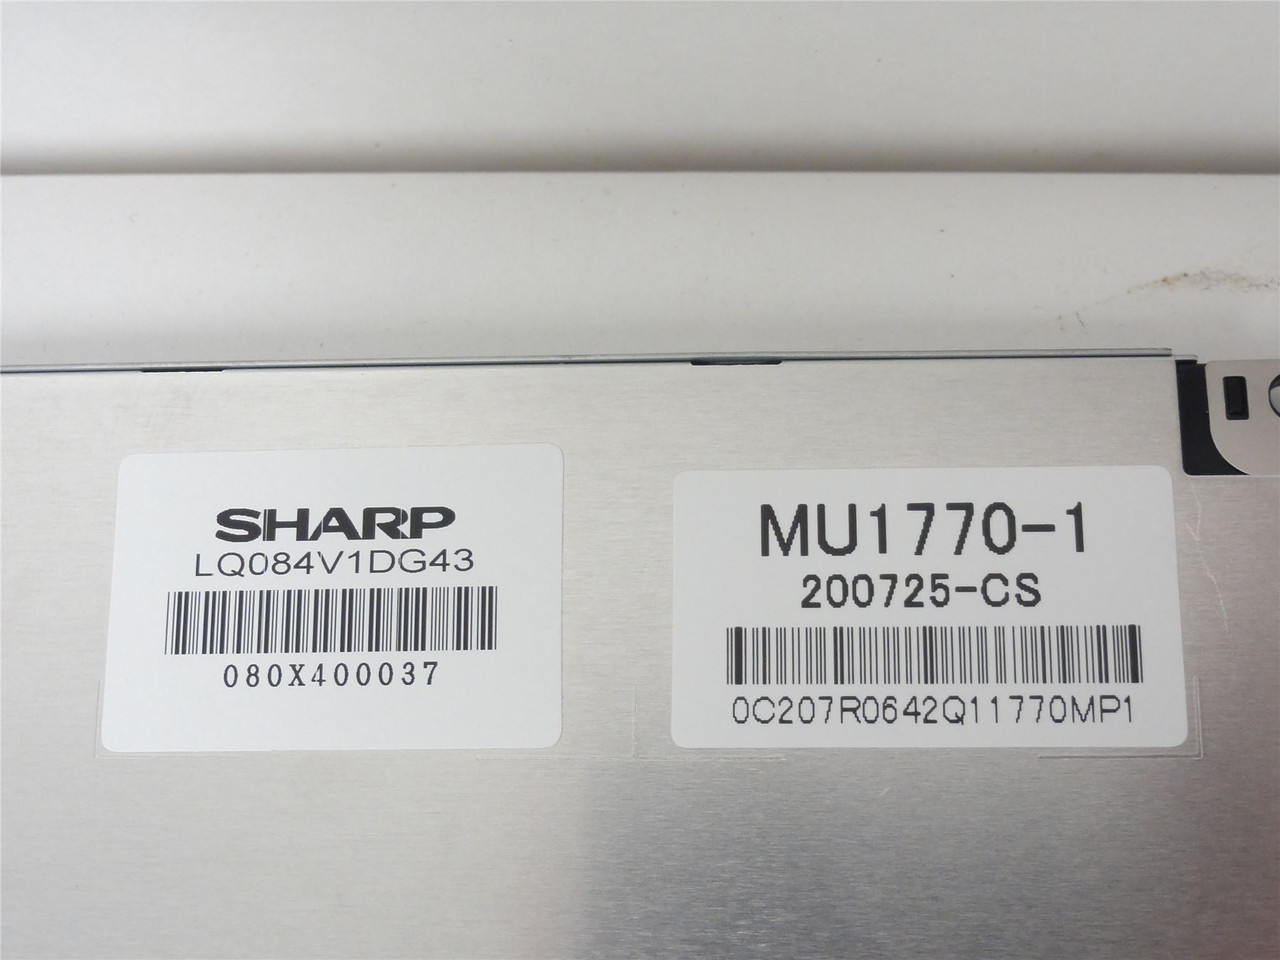 Marel 4263897; LED Display Kit; M3000; Sharp LQ084V1DG43